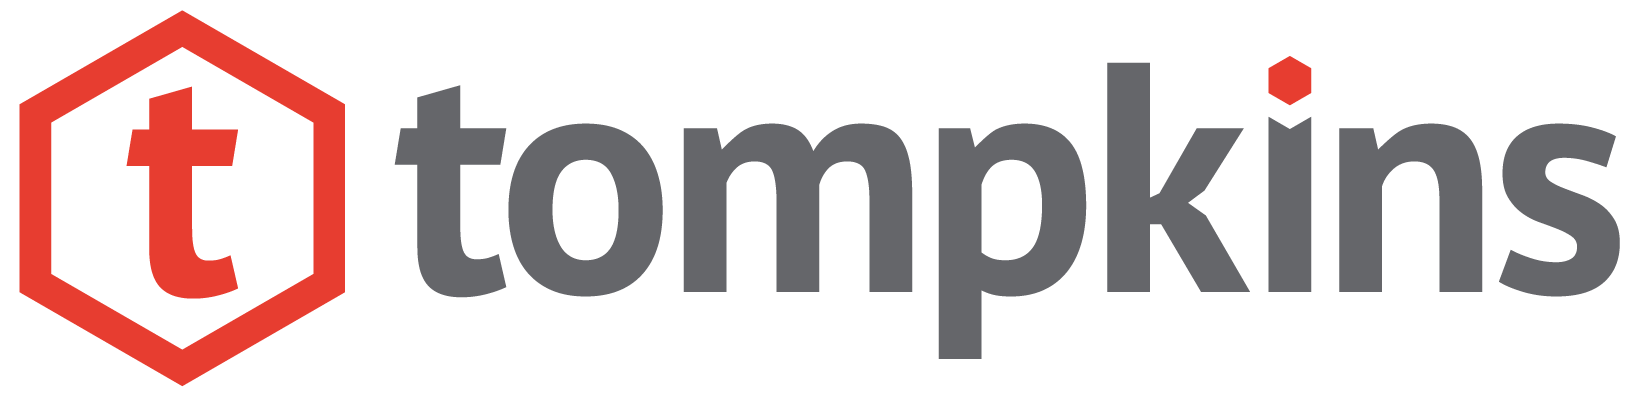 Tompkins Logo - Home Supply Chain Leadership Forum